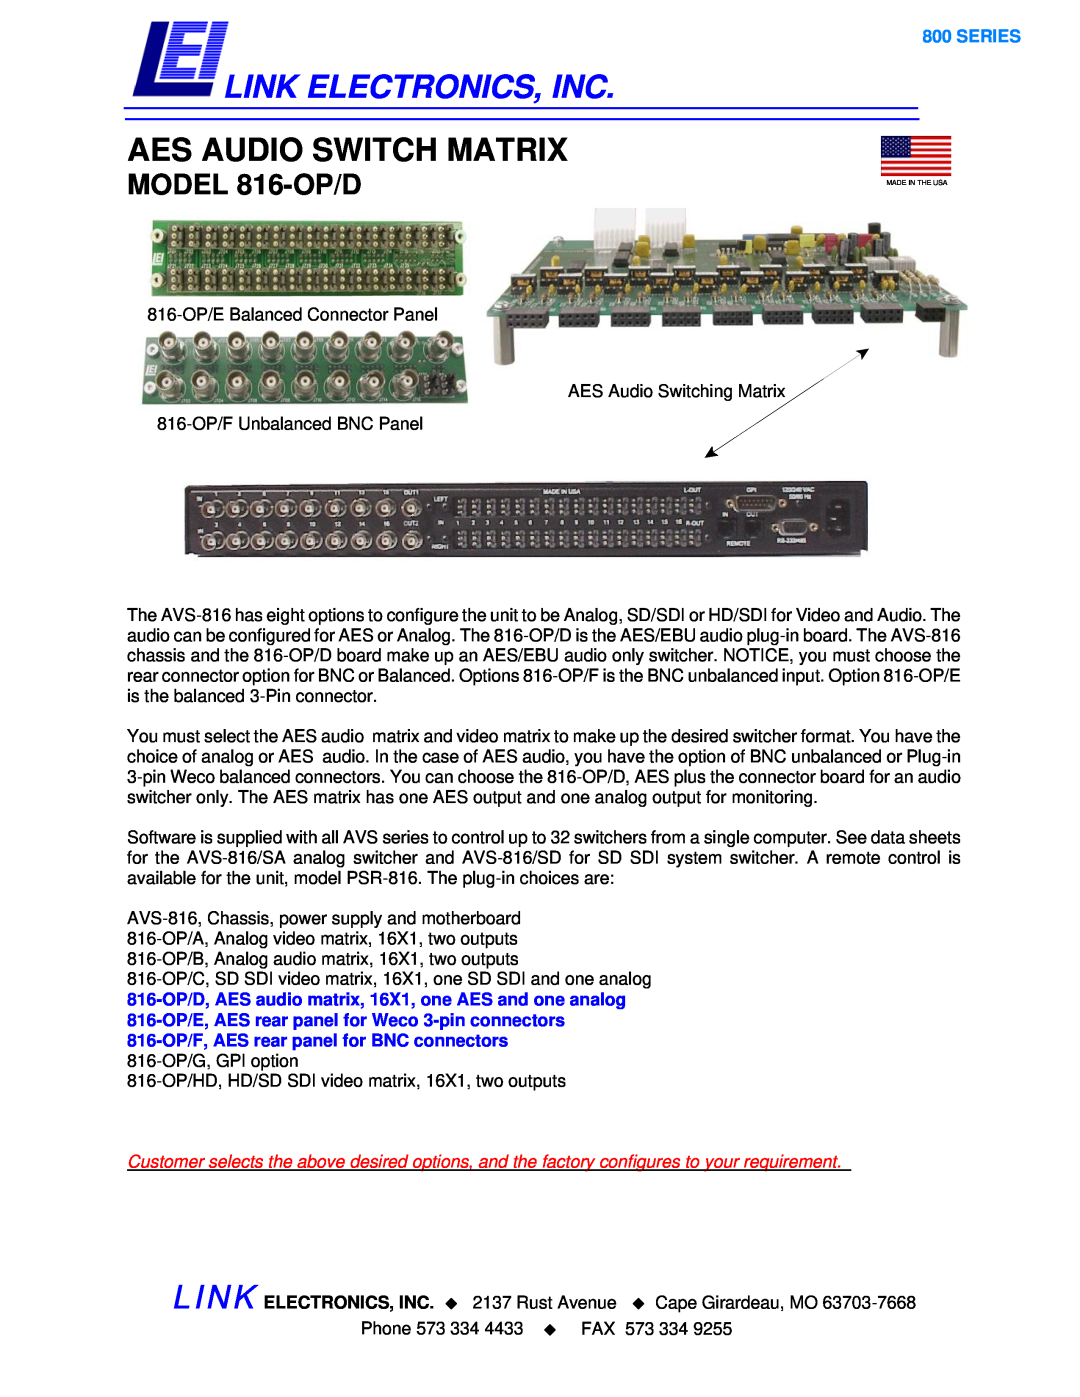 Link electronic manual Link Electronics, Inc, Aes Audio Switch Matrix, MODEL 816-OP/D, Series 